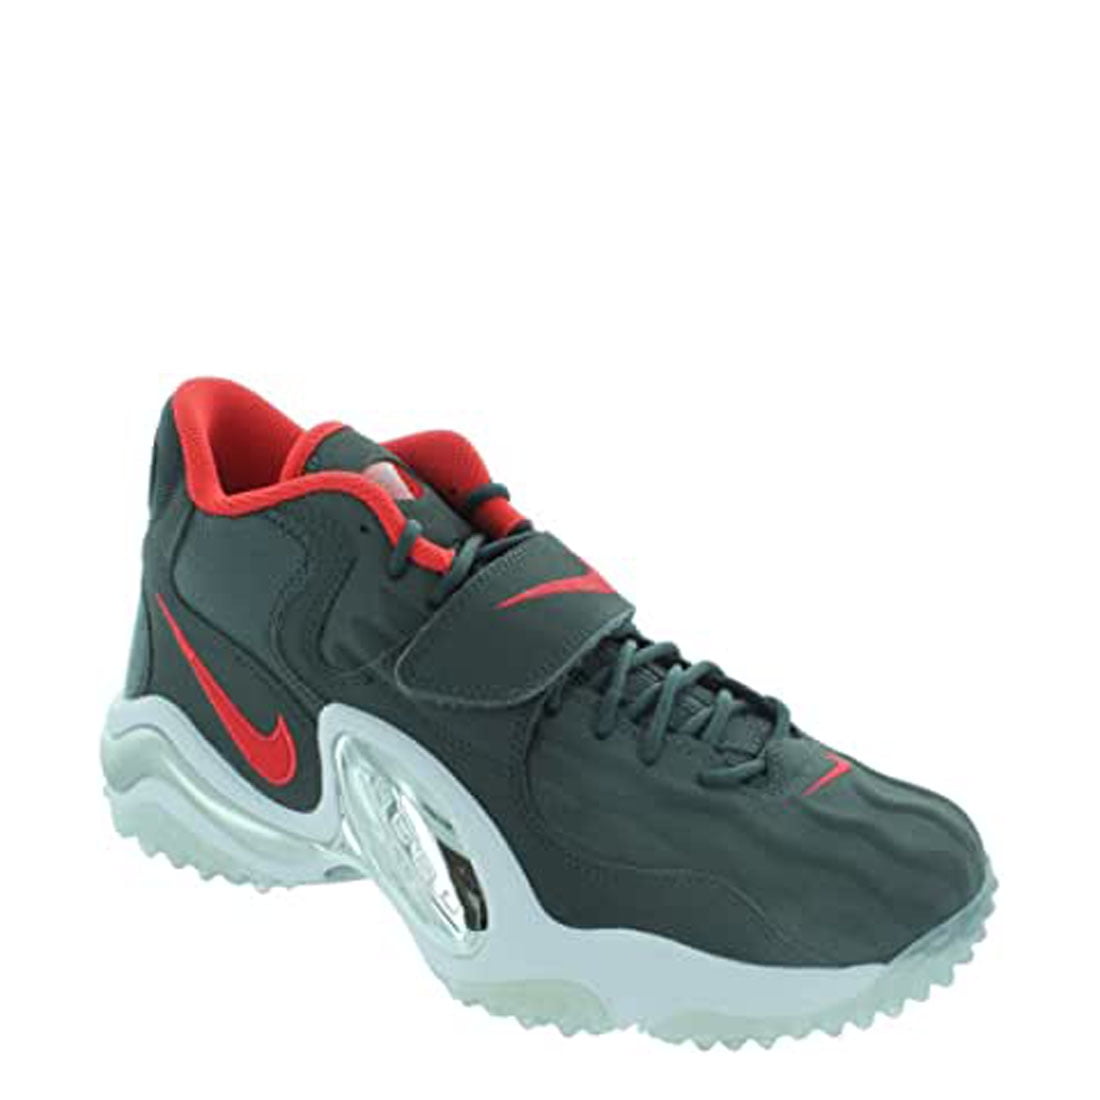 NIKE Air Zoom Turf JET 97 shoe size 7 Casual 554989004 Anthracite White - Walmart.com